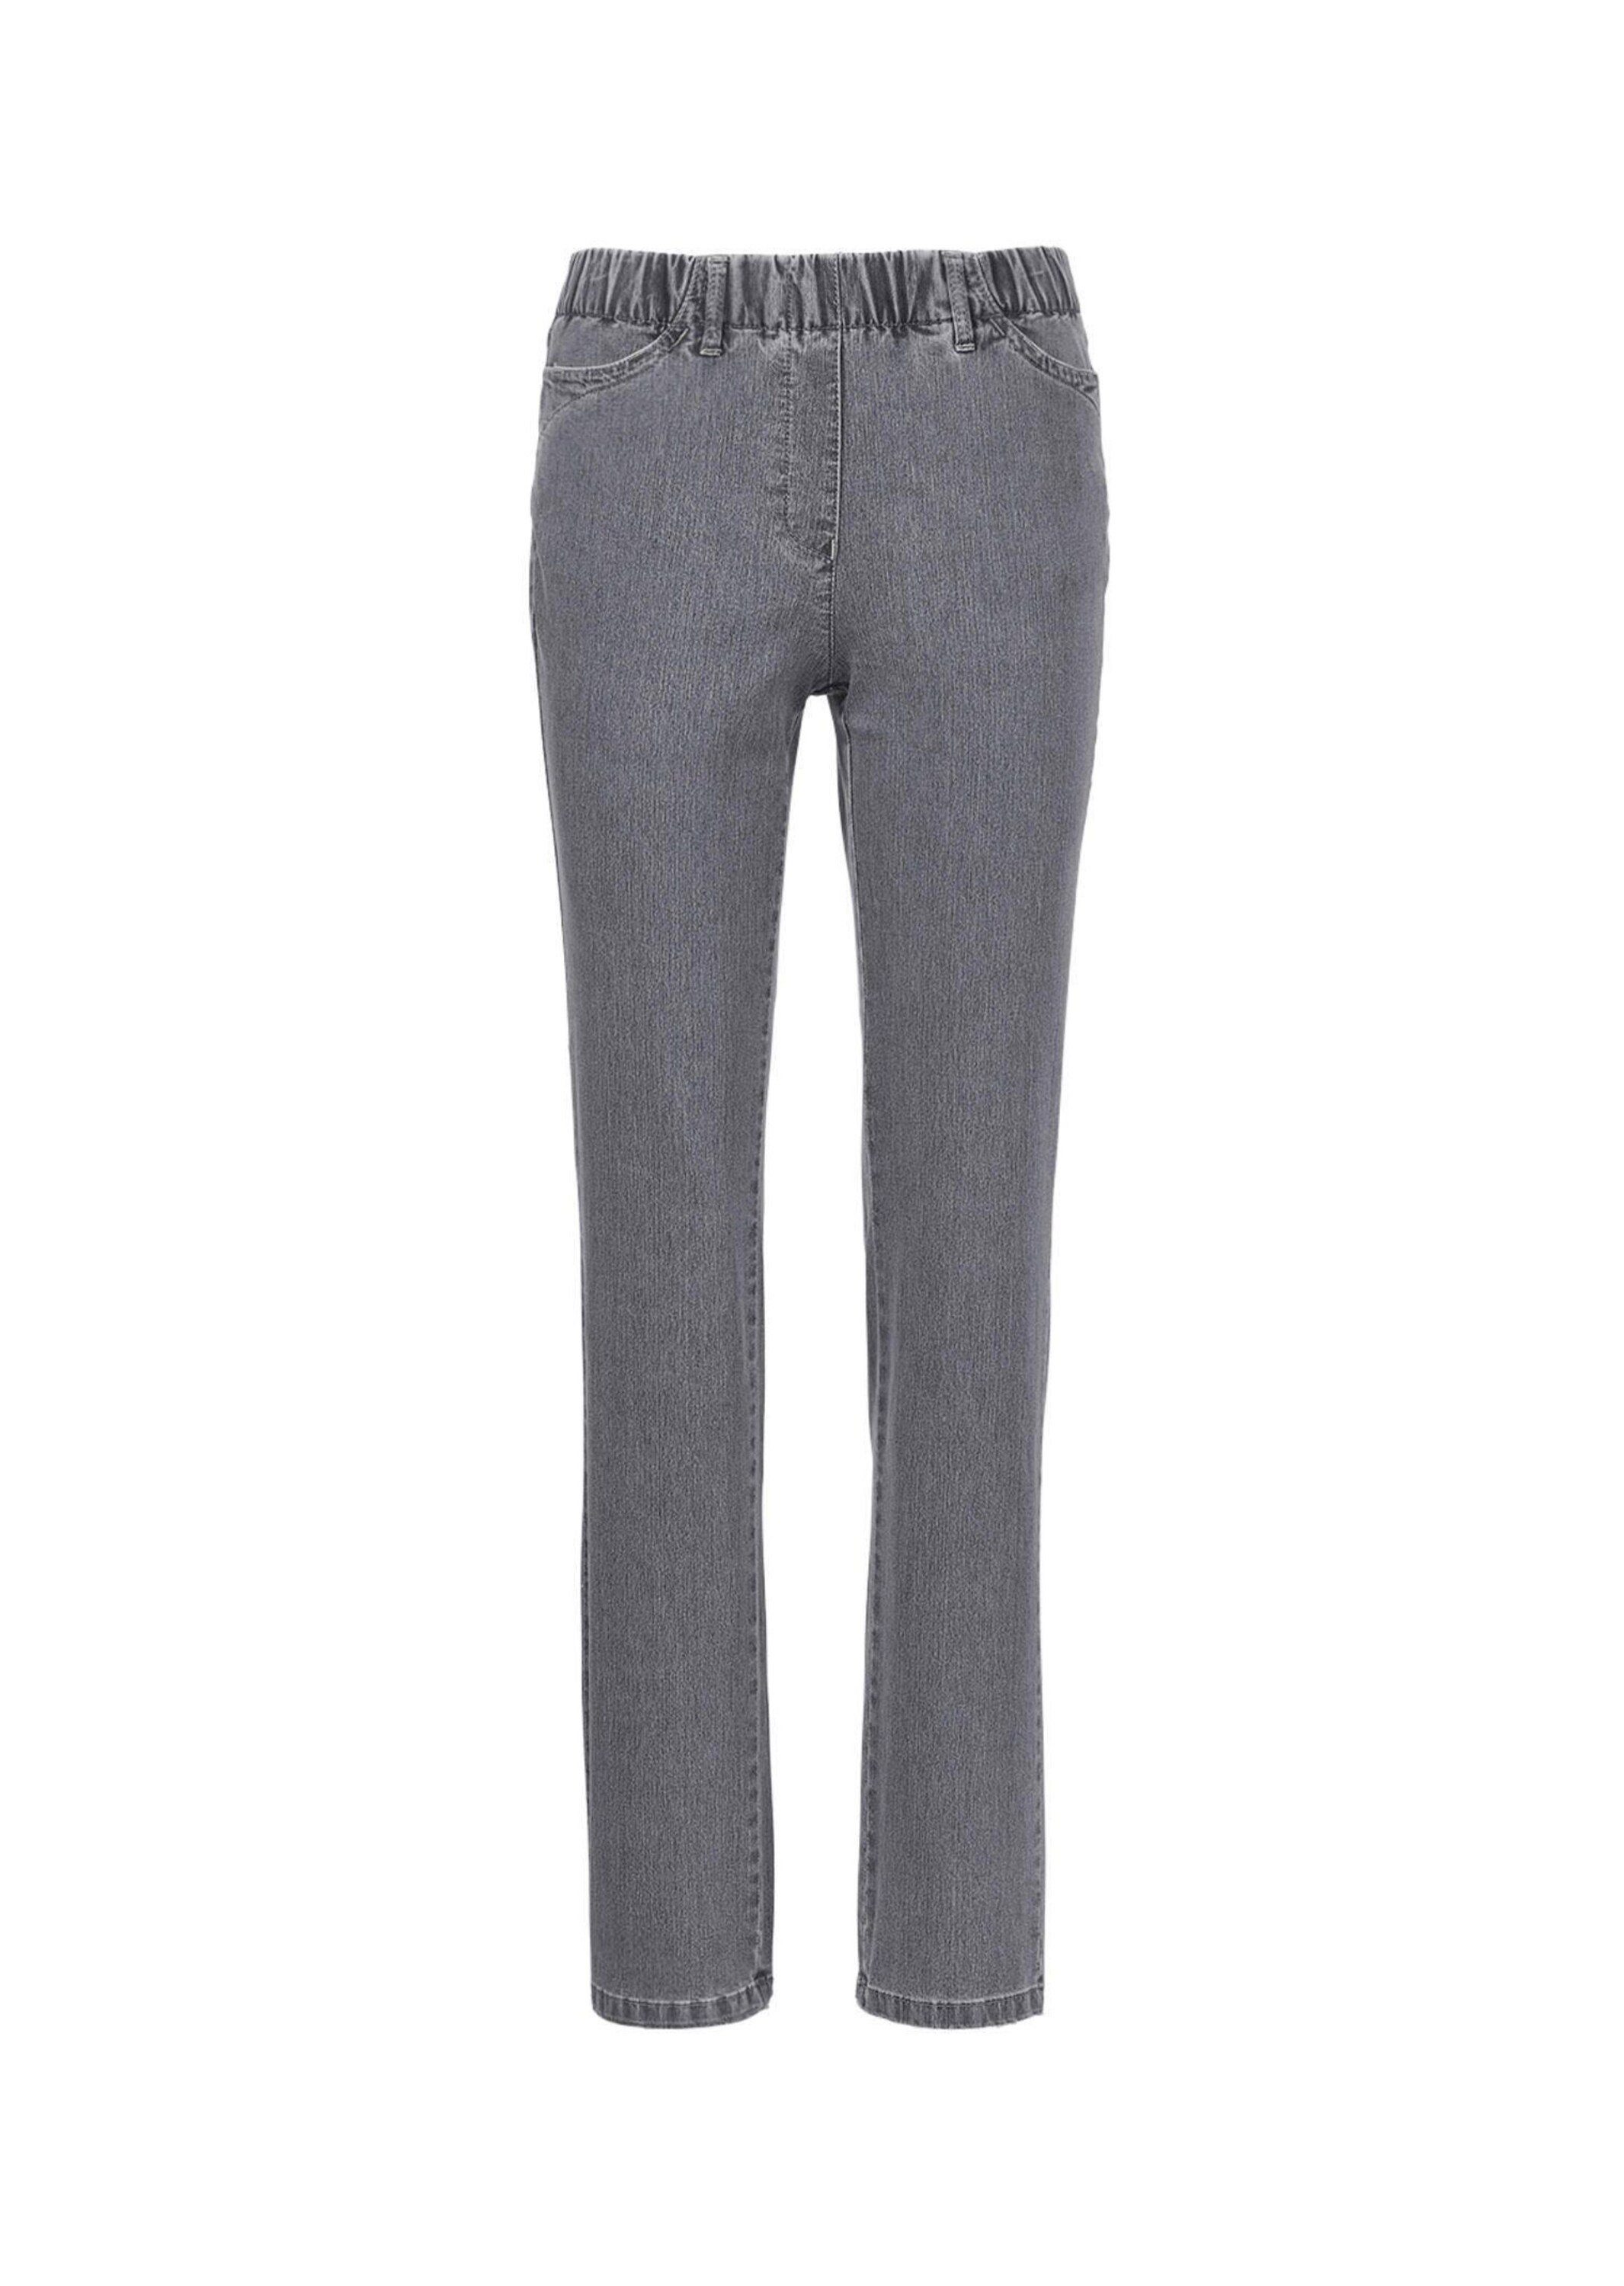 Jeans GOLDNER grau Bequeme Kurzgröße: